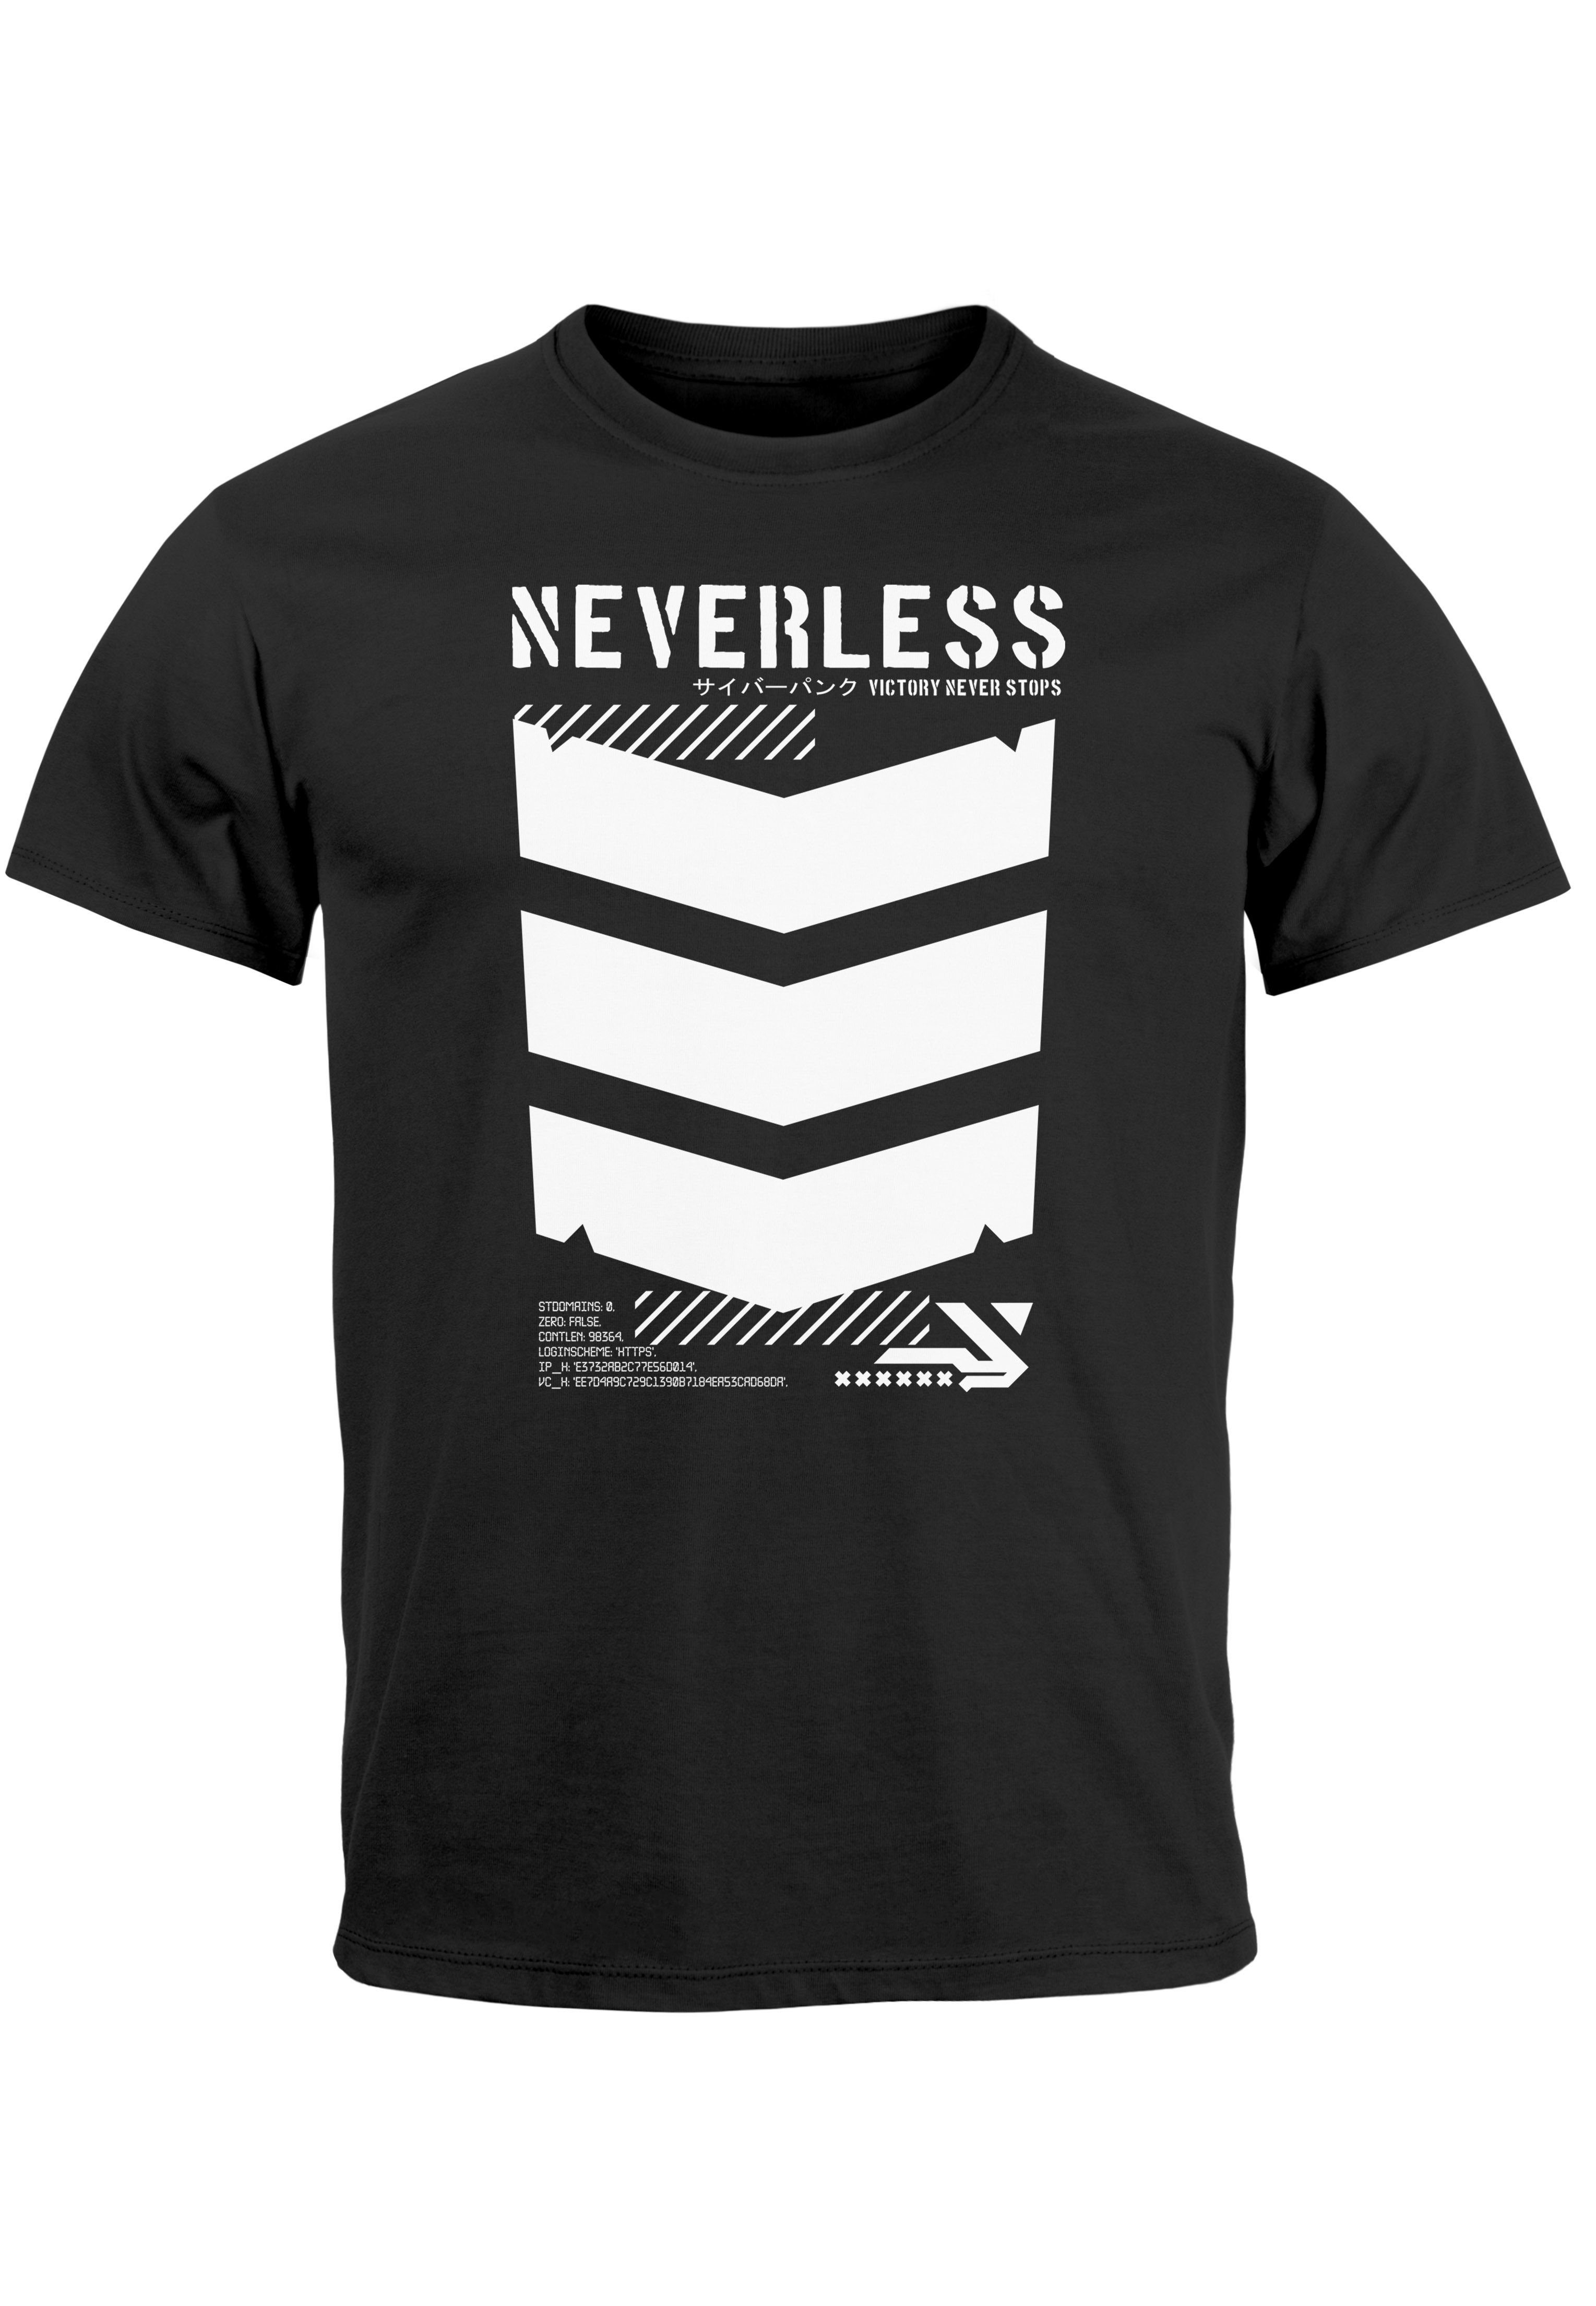 Neverless Print-Shirt Herren T-Shirt Techwear Trend Motive Japanese Streetstyle Military Fas mit Print schwarz